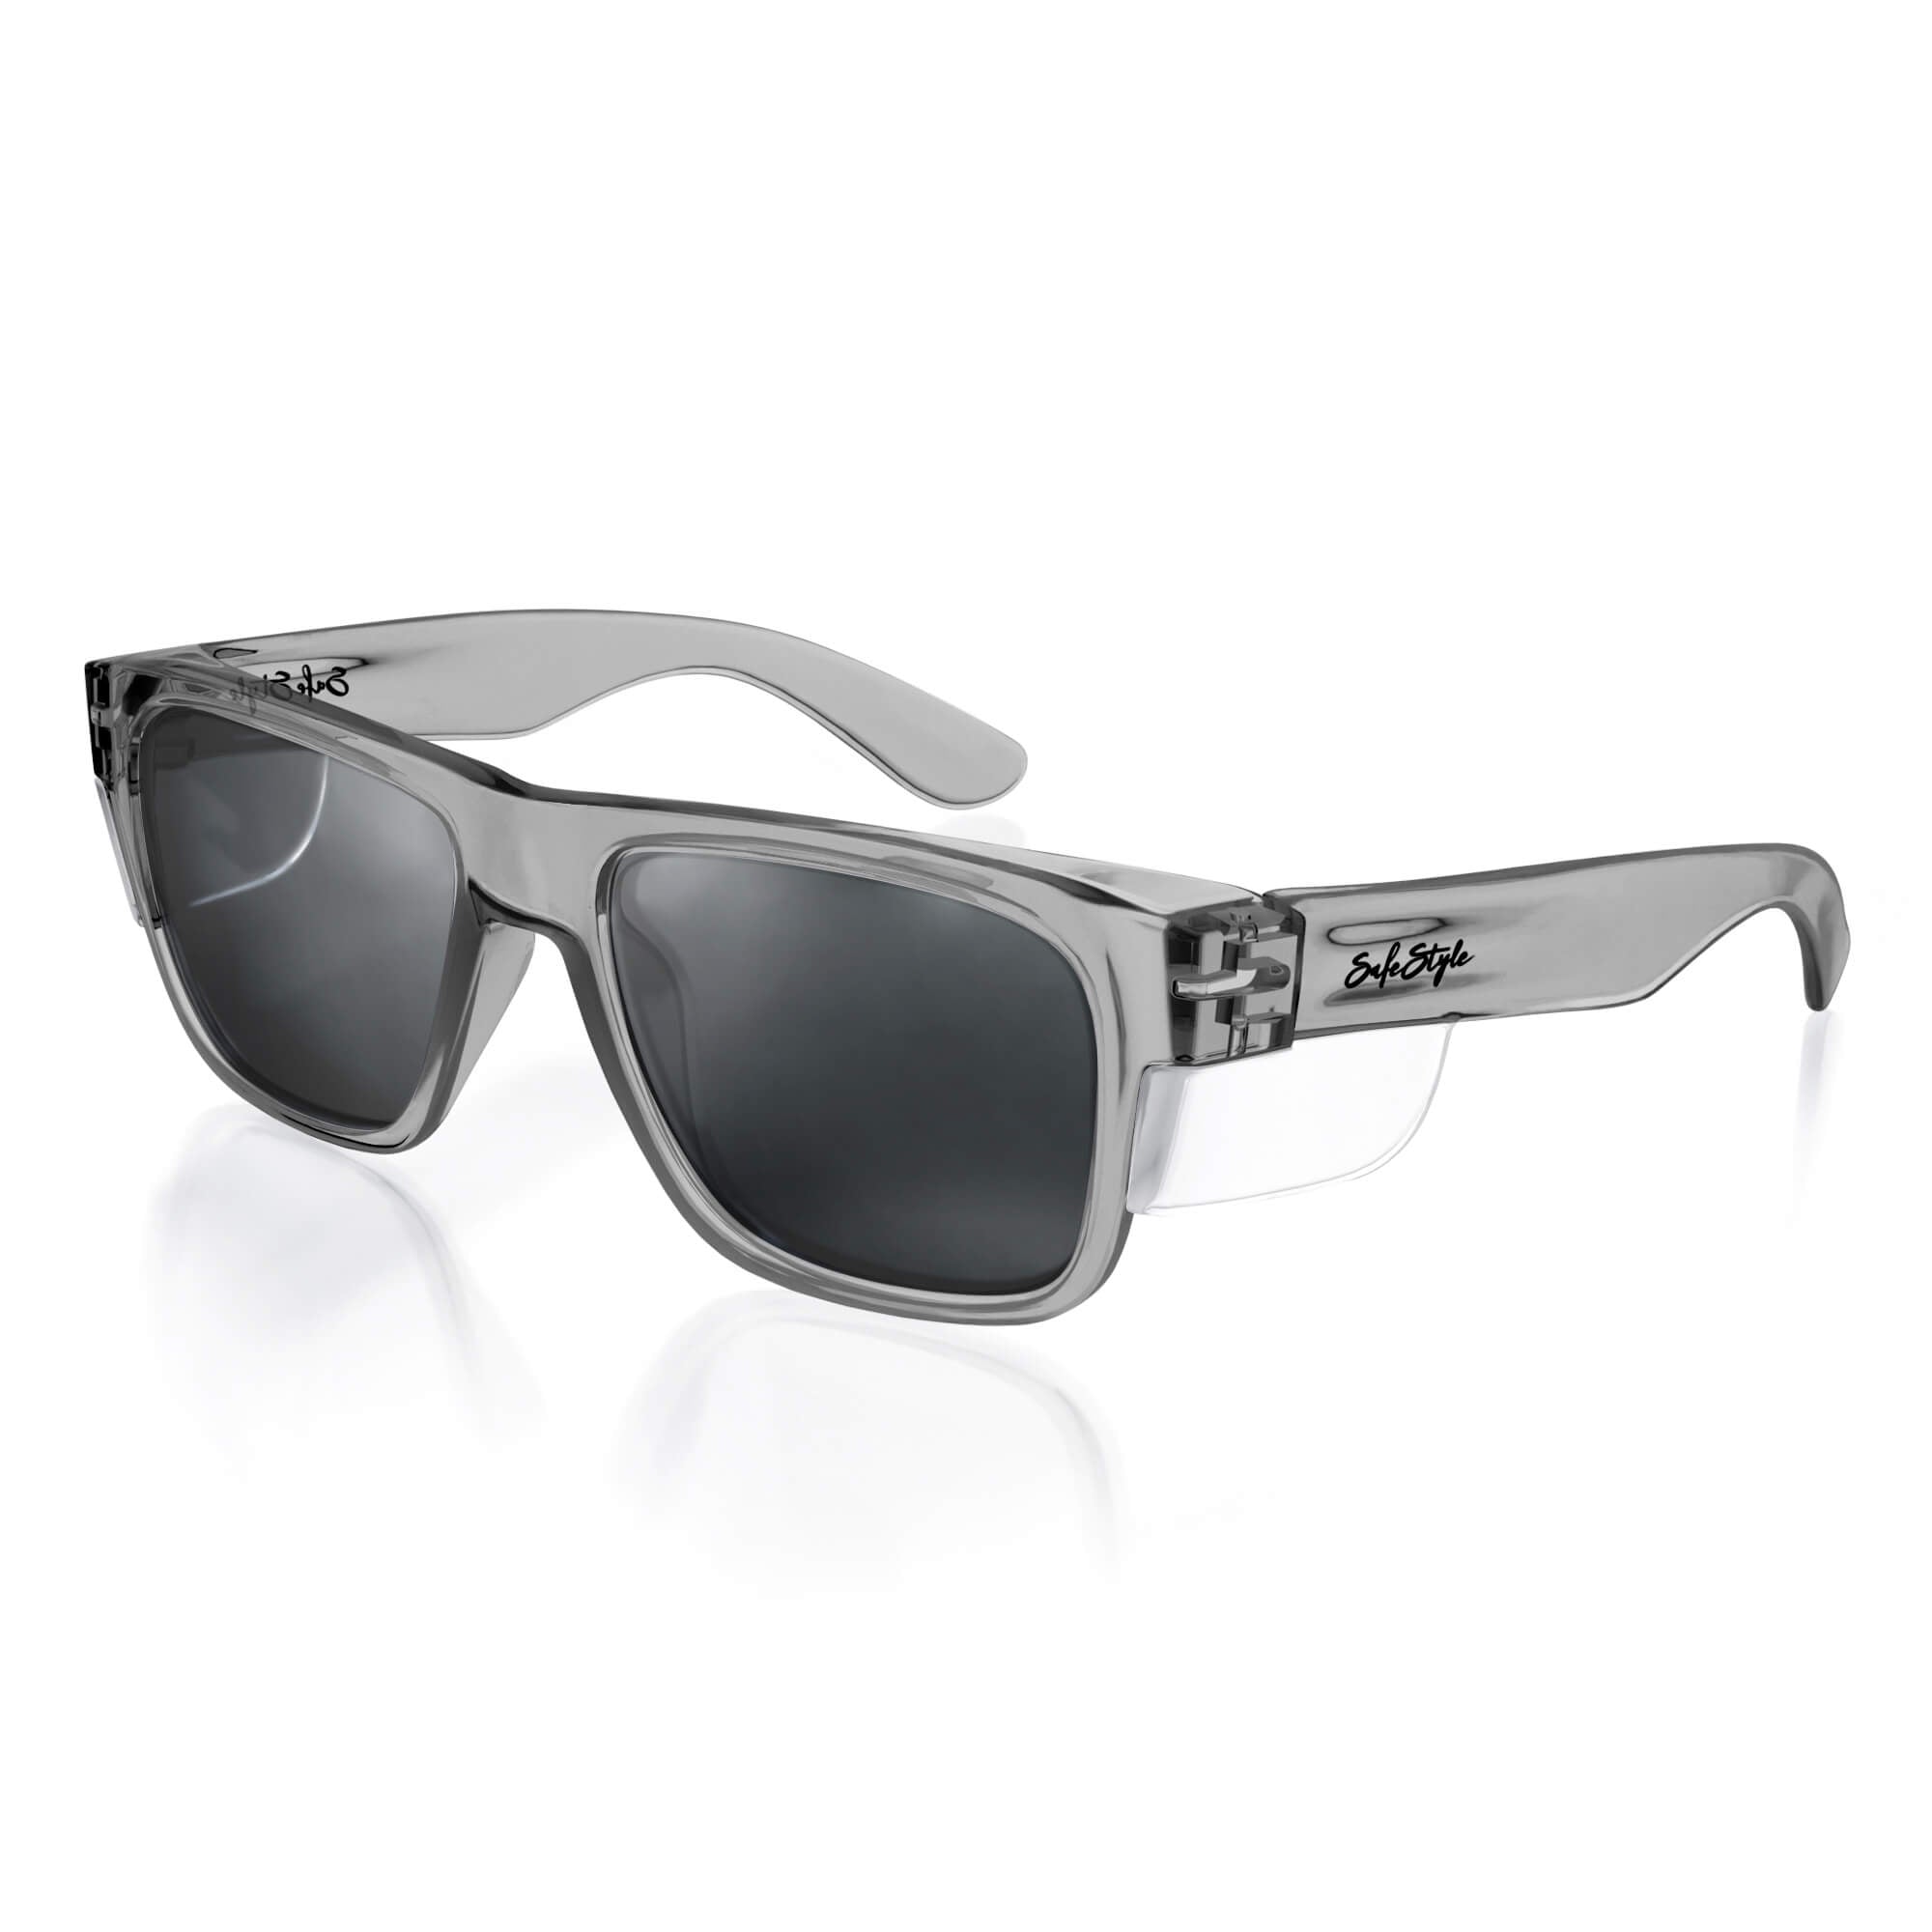 SafeStyle Fusions Graphite Frame/ Polarised UV400 Lens glasses